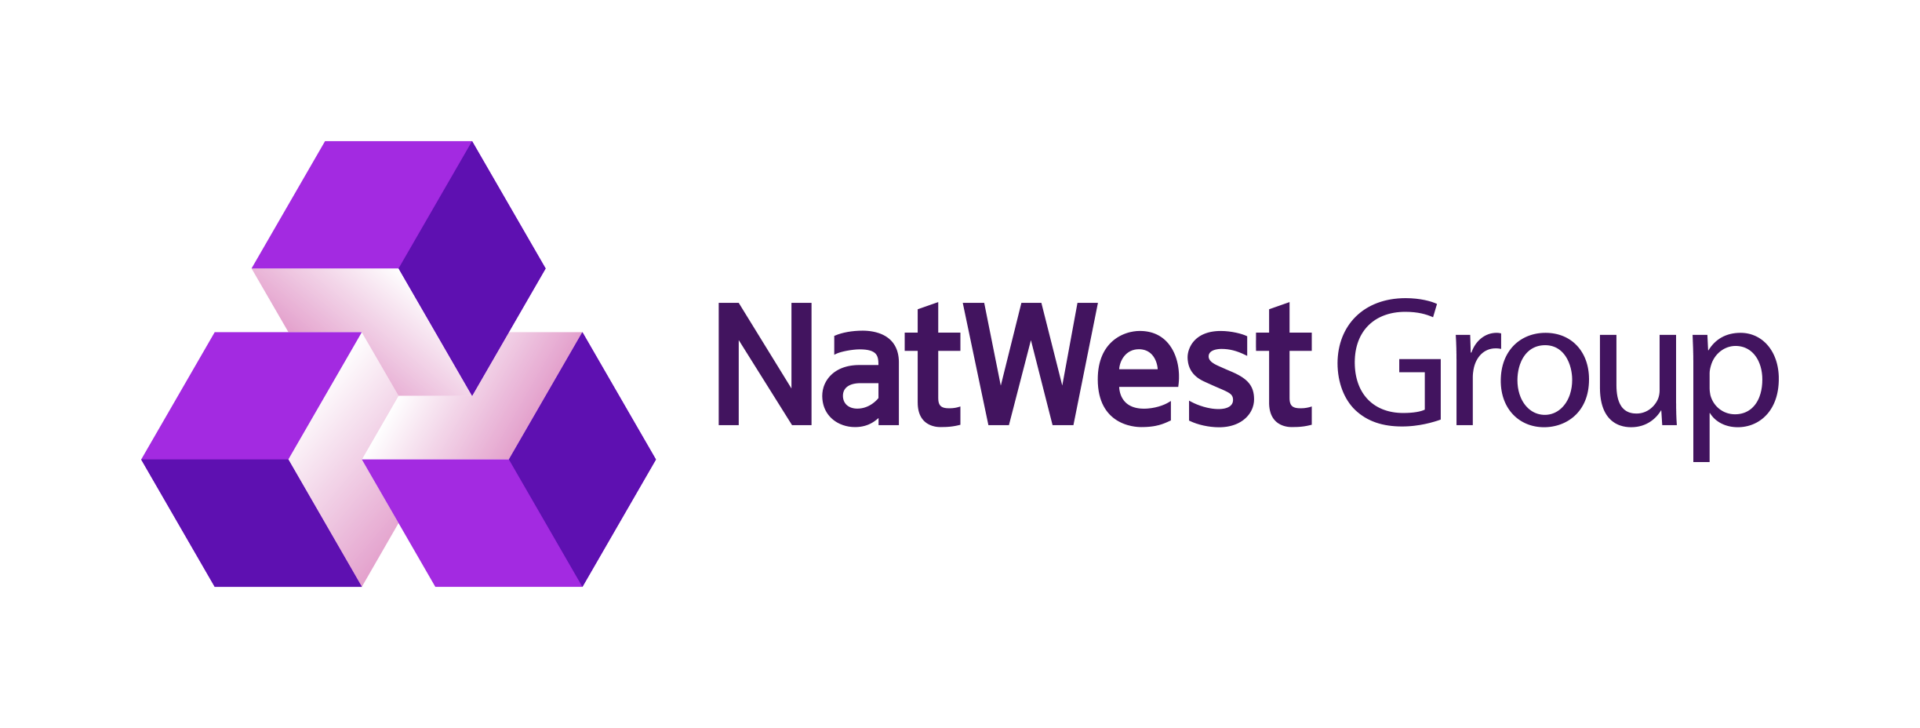 Natwest Group - hogere resolutie